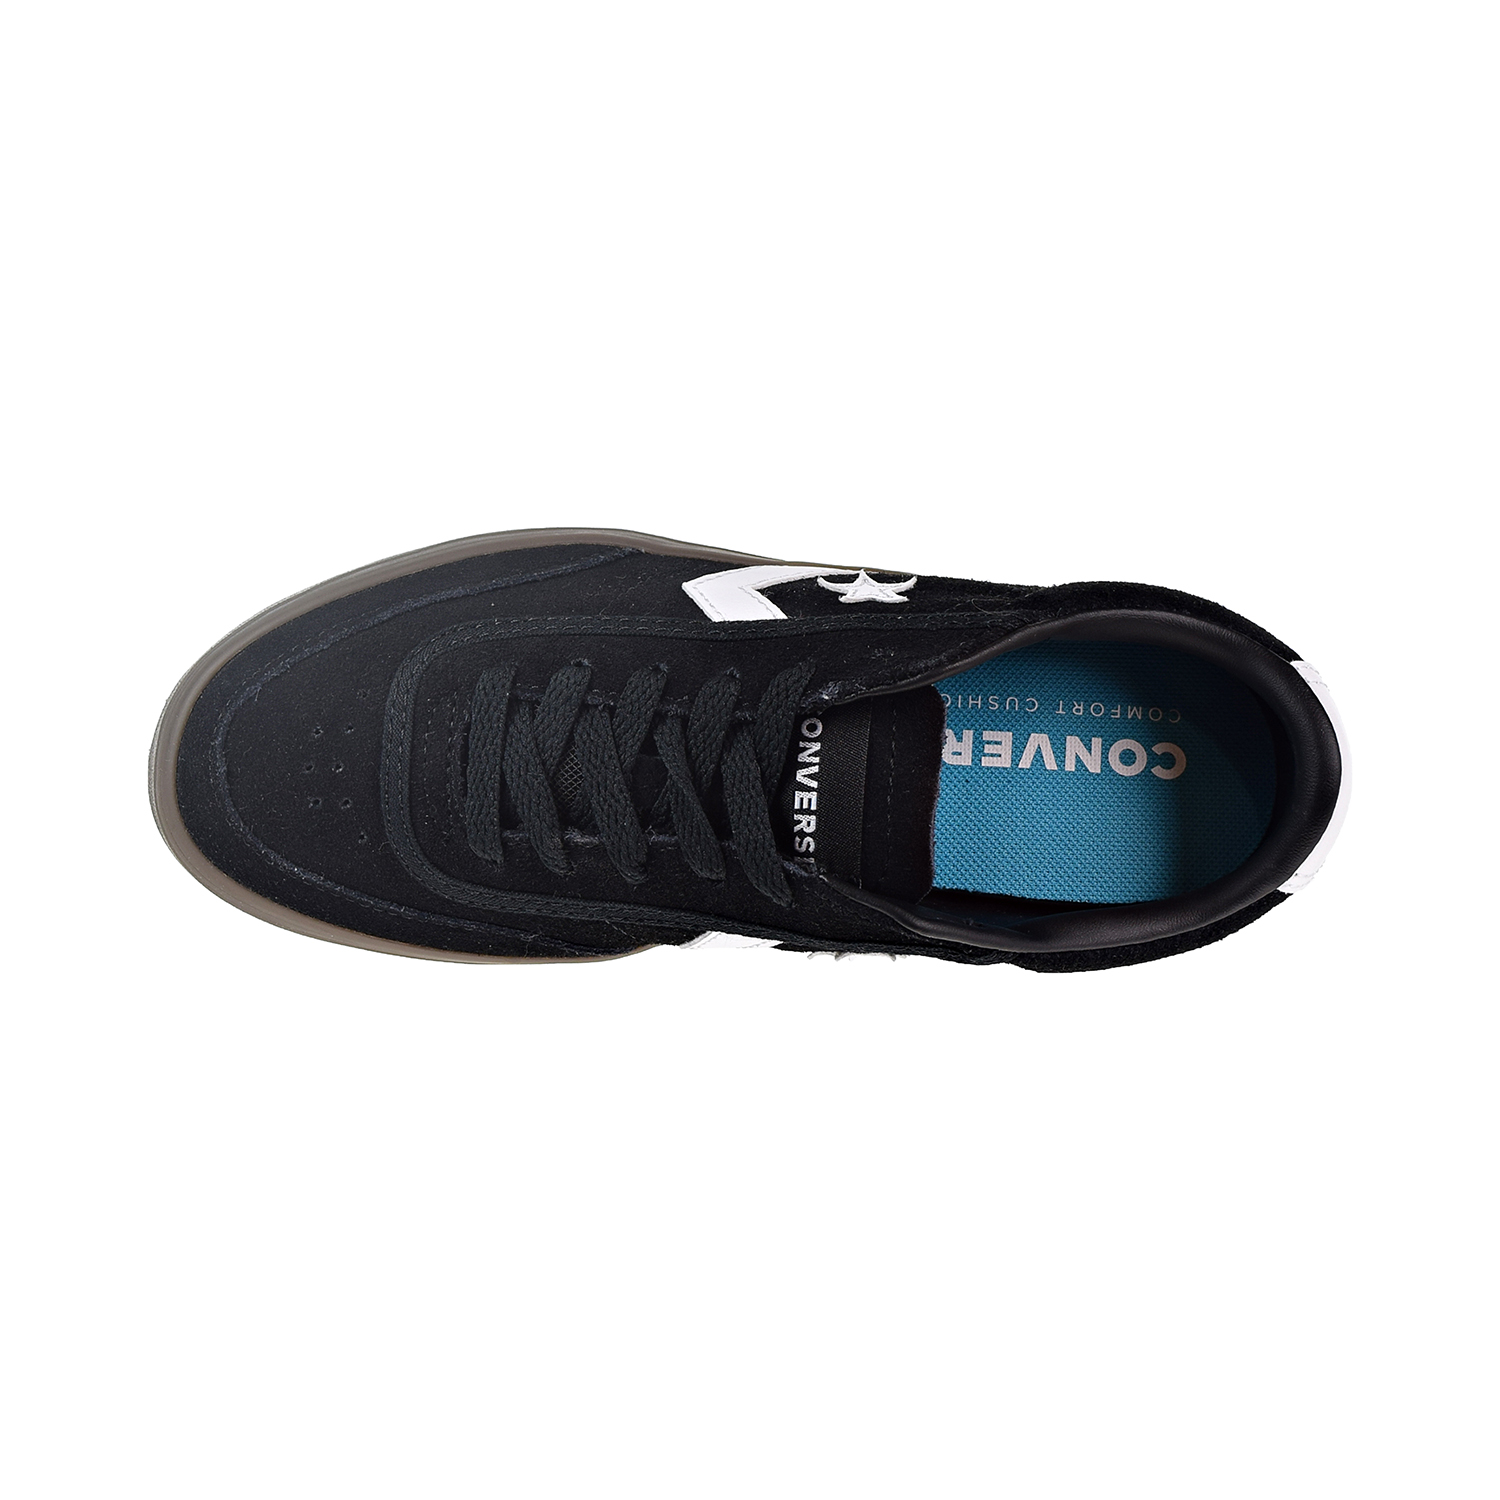 Converse Courtlandt OX Big Kids'/Men's Shoes Black-White-Brown 162570c - image 5 of 6